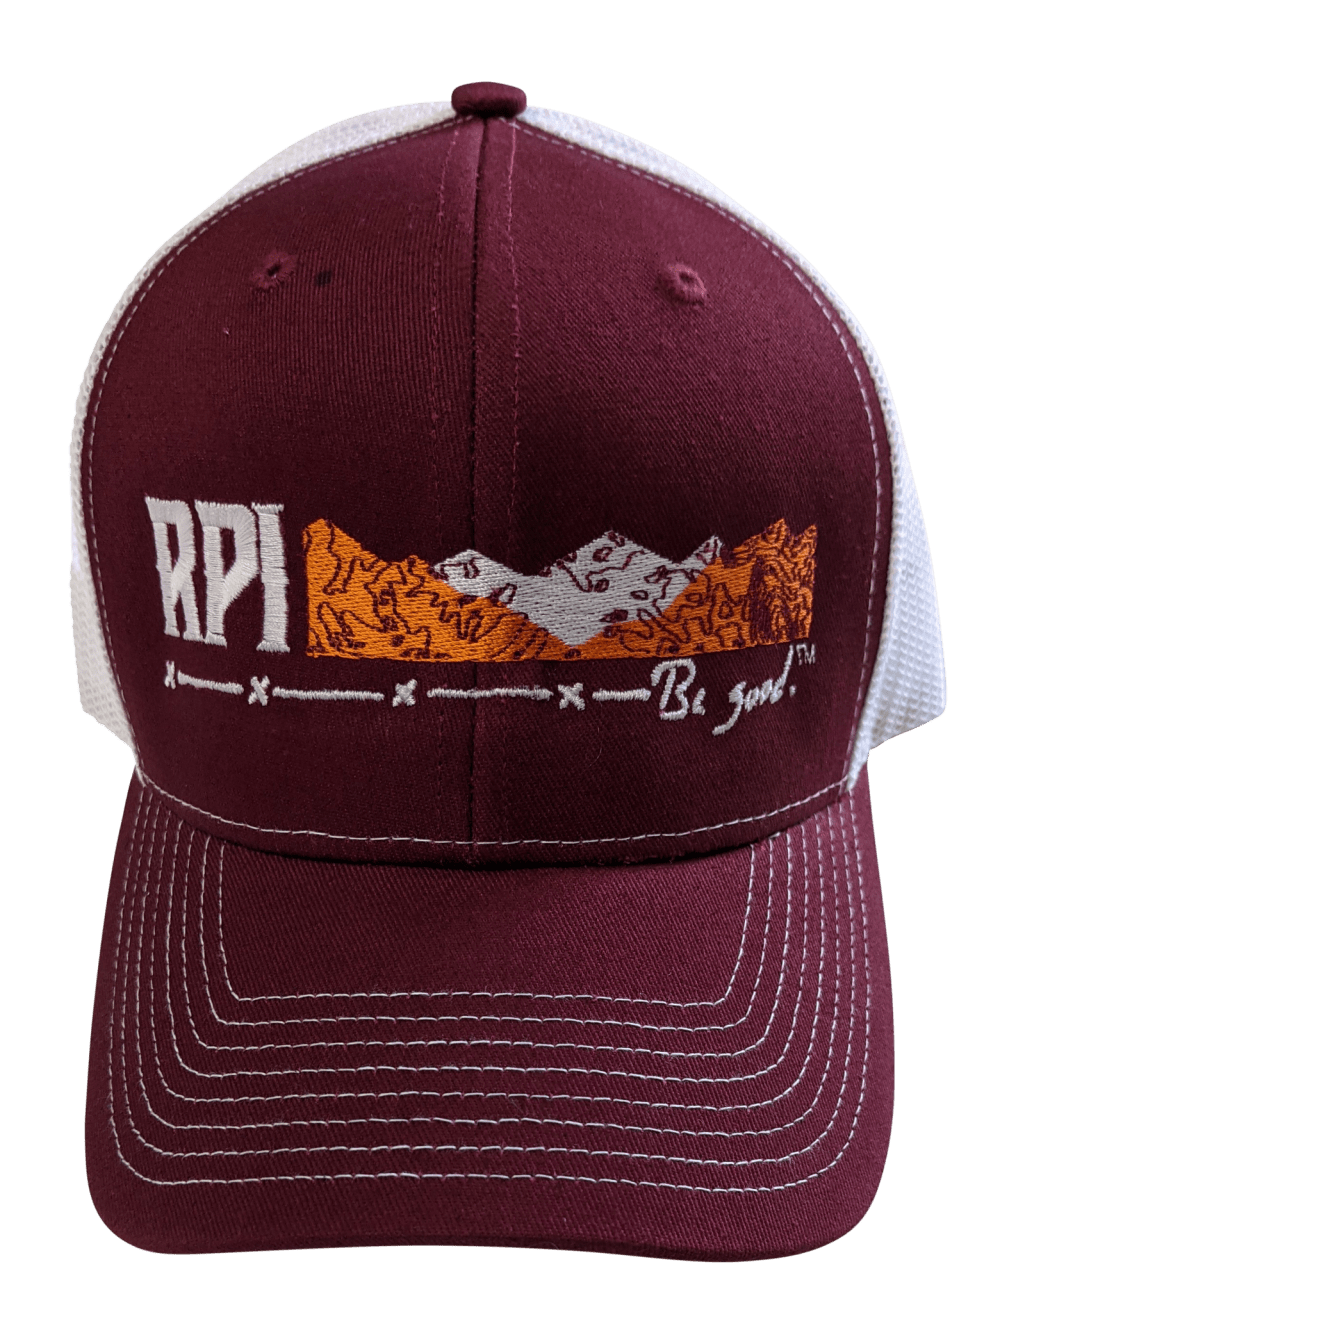 RPI Idaho  Classic Trucker Hat - Maroon/White